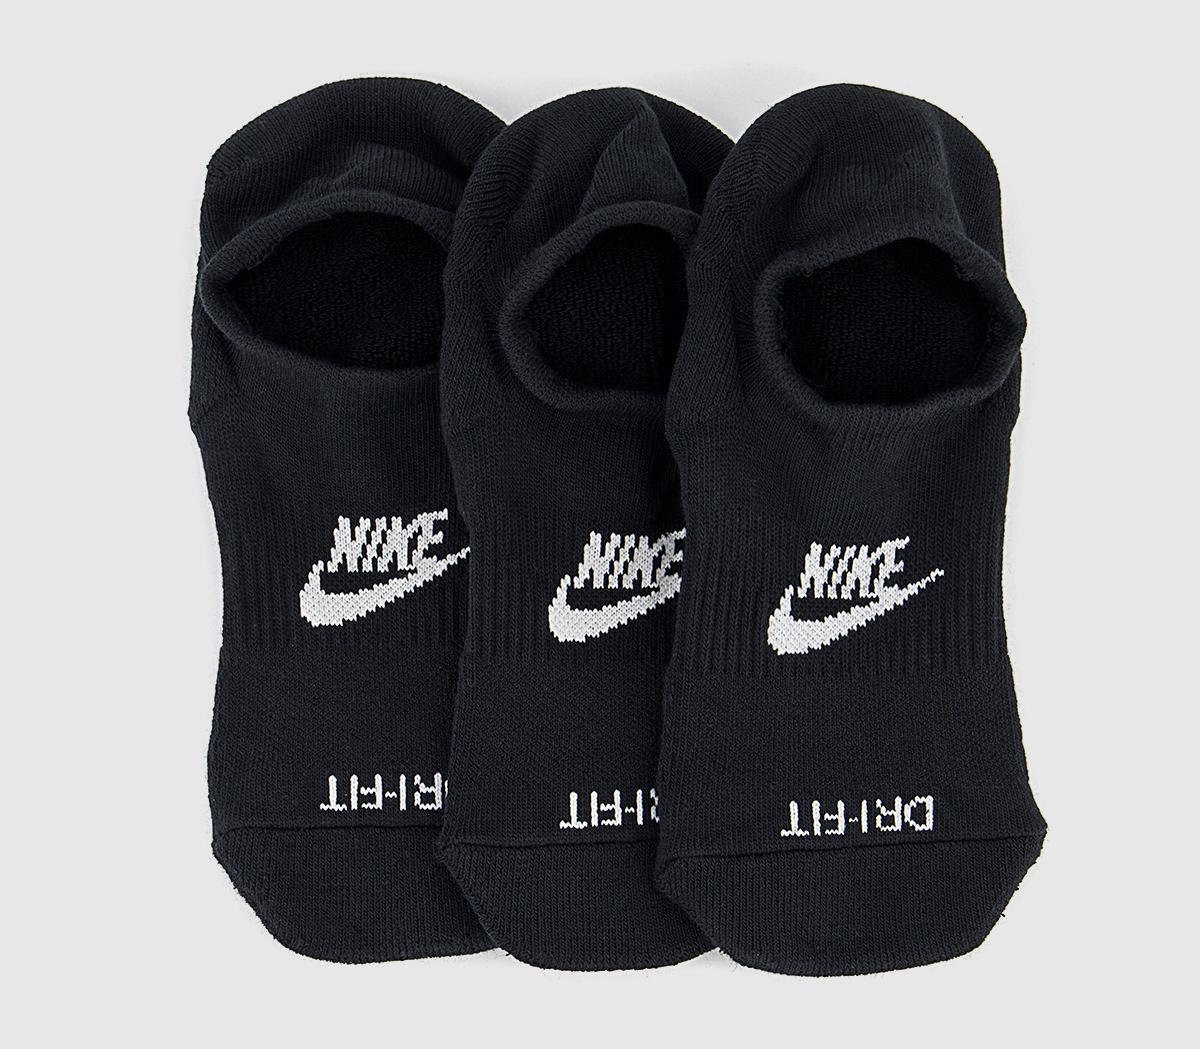 Nike Footie Socks Black White, S